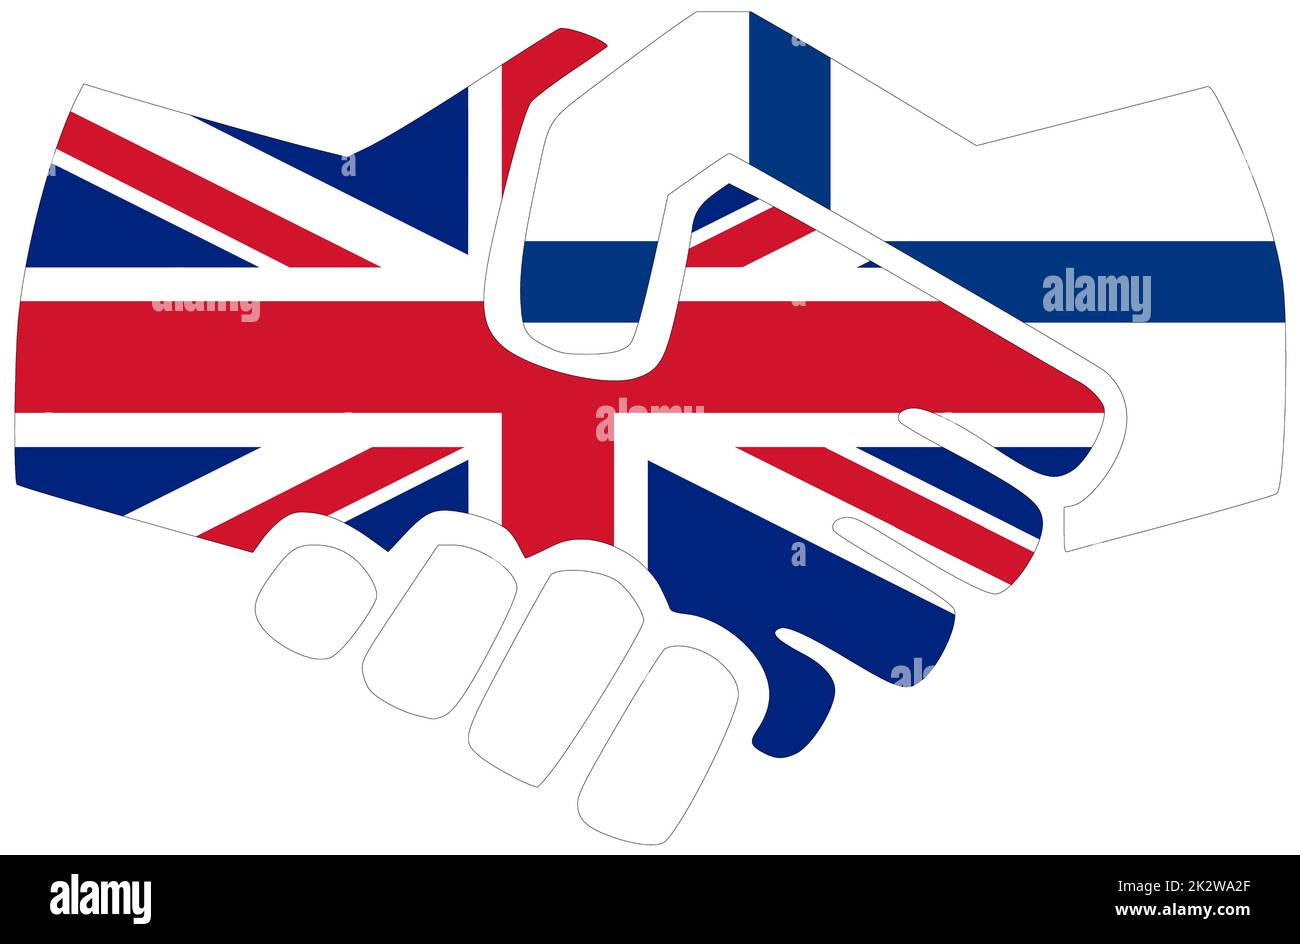 UK - Finland : Handshake, symbol of agreement or friendship Stock Photo